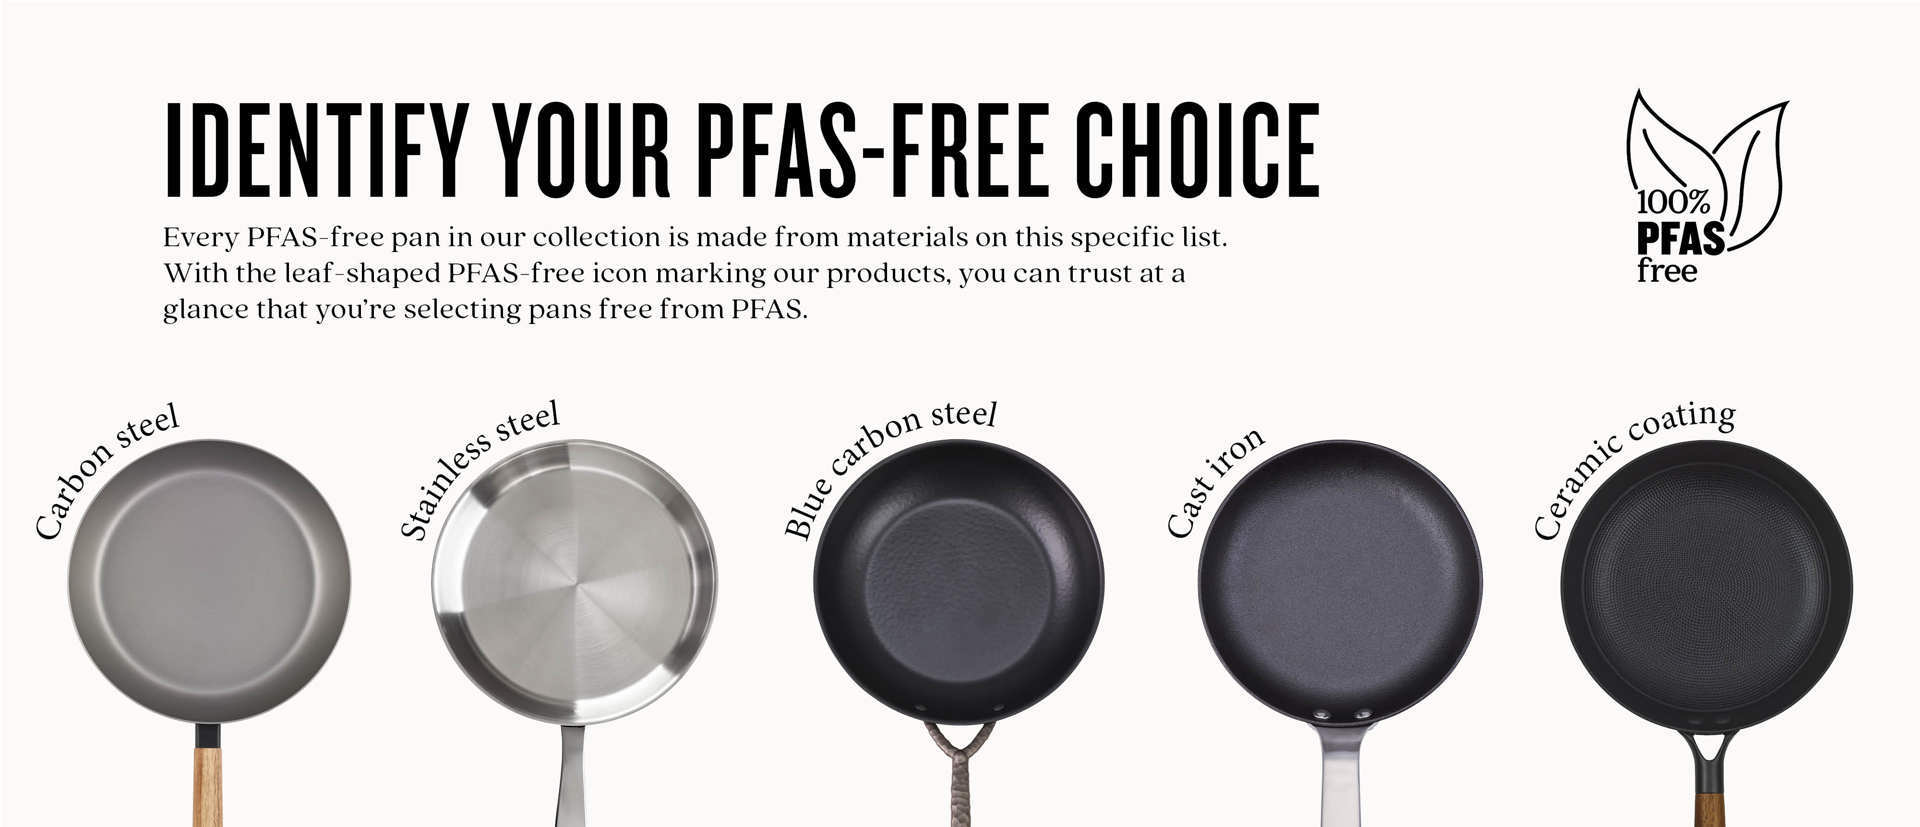 pfas free cooking